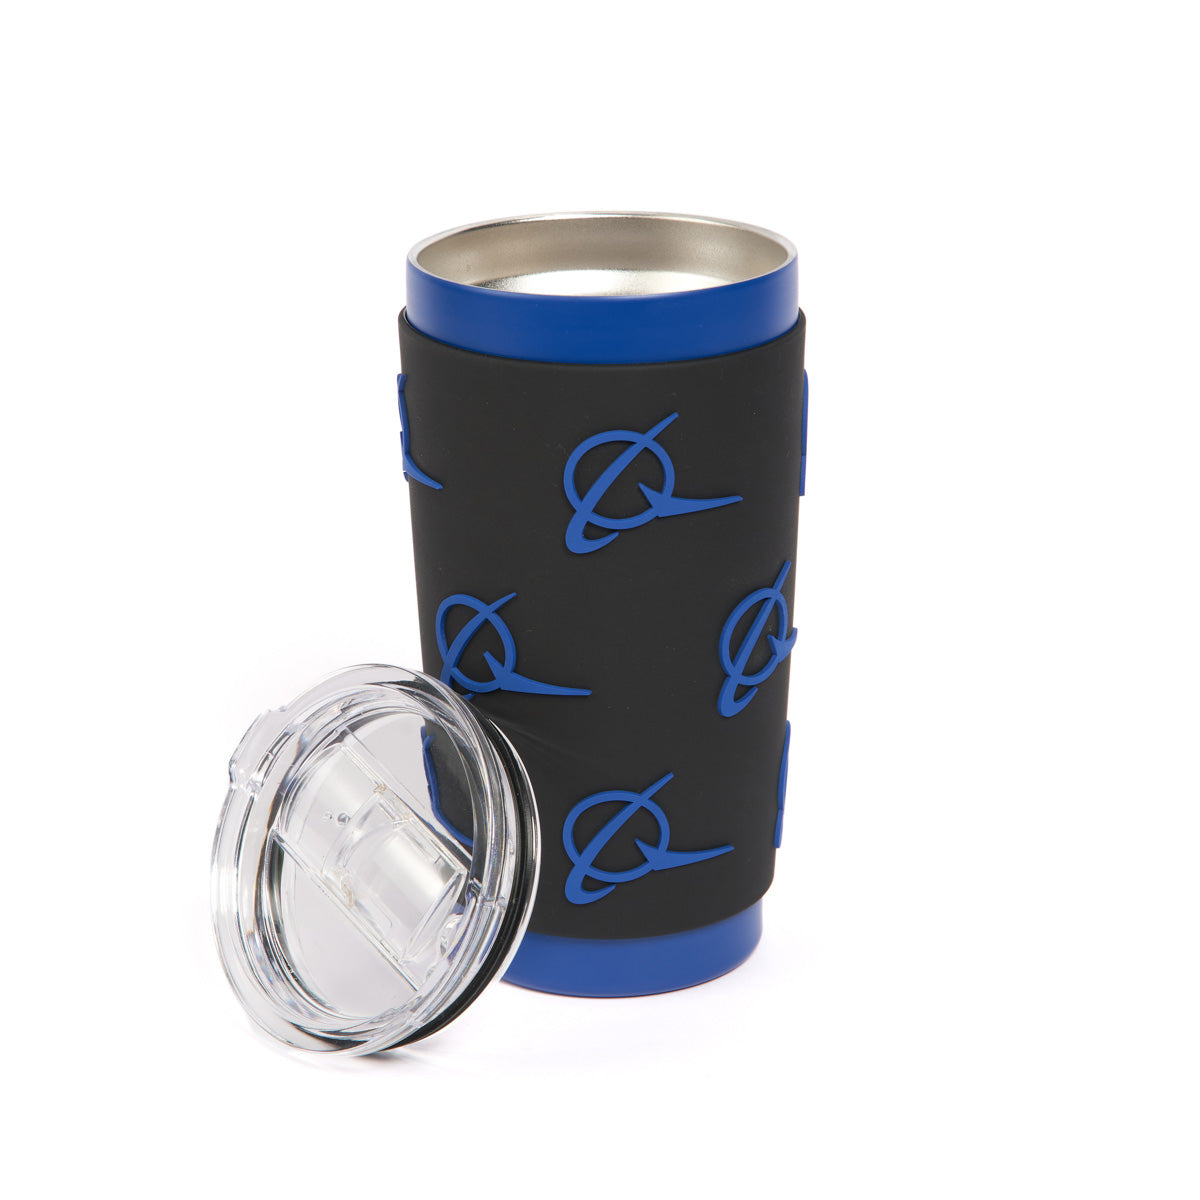 Hydroflask Boeing Coffee Mug – The Boeing Store